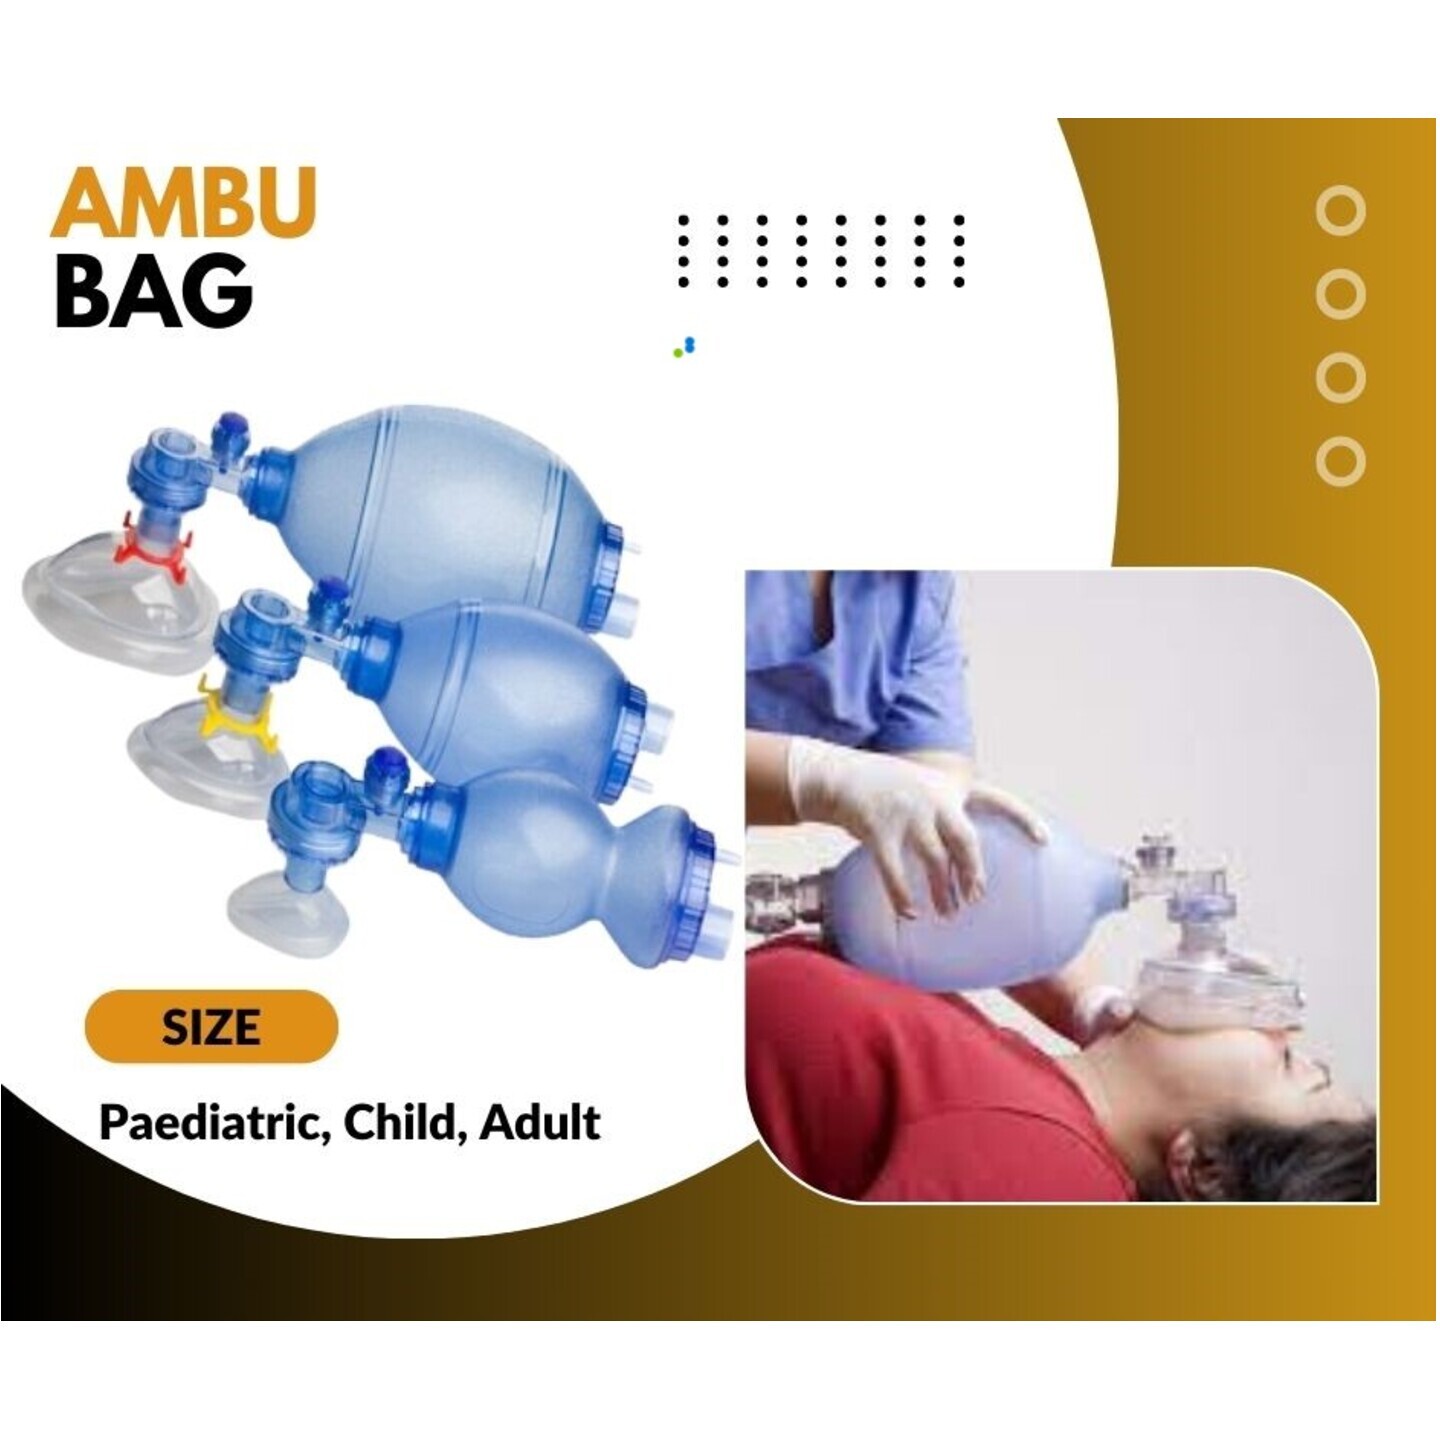 Ambu Bag or Resuscitation Kit